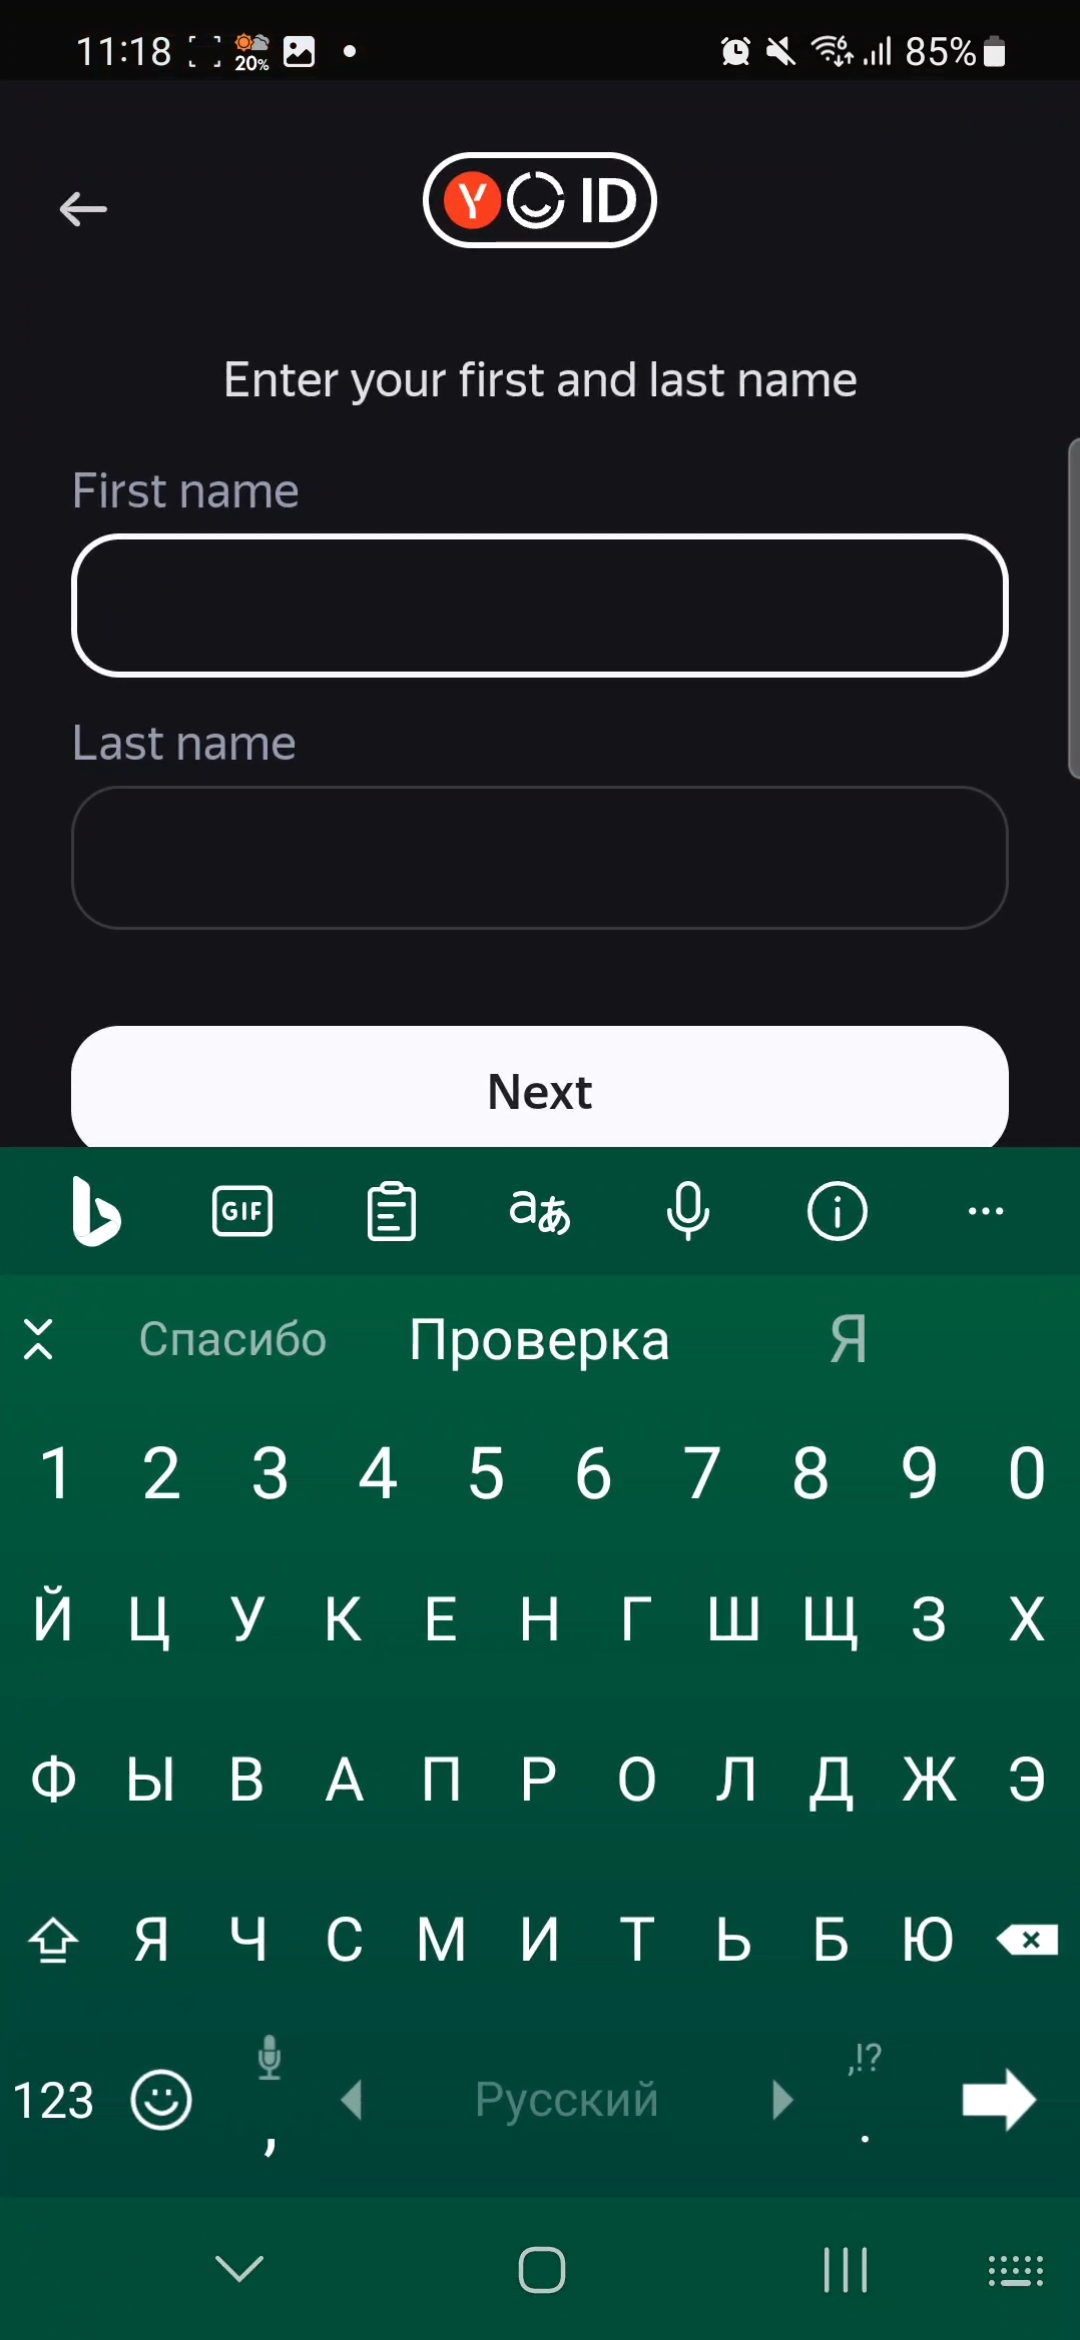 Yandexの登録方法